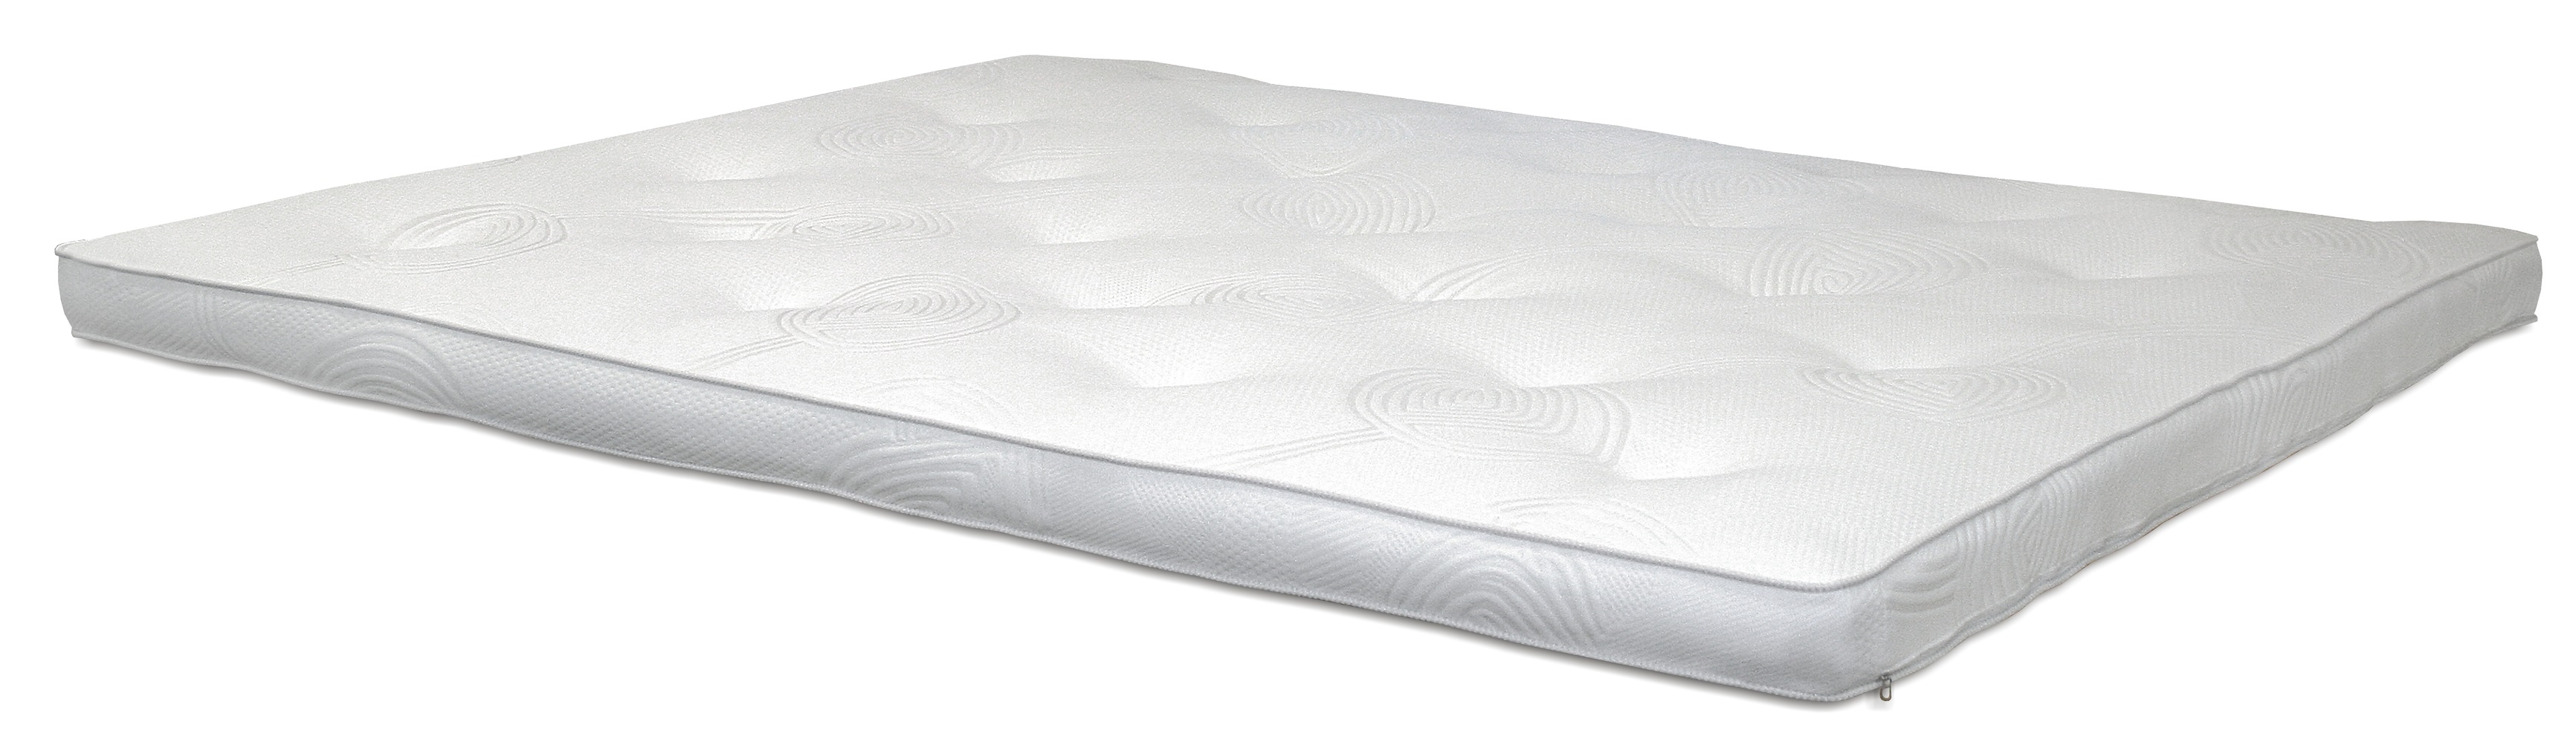 GRAND TOP mattress WHITE 1 14